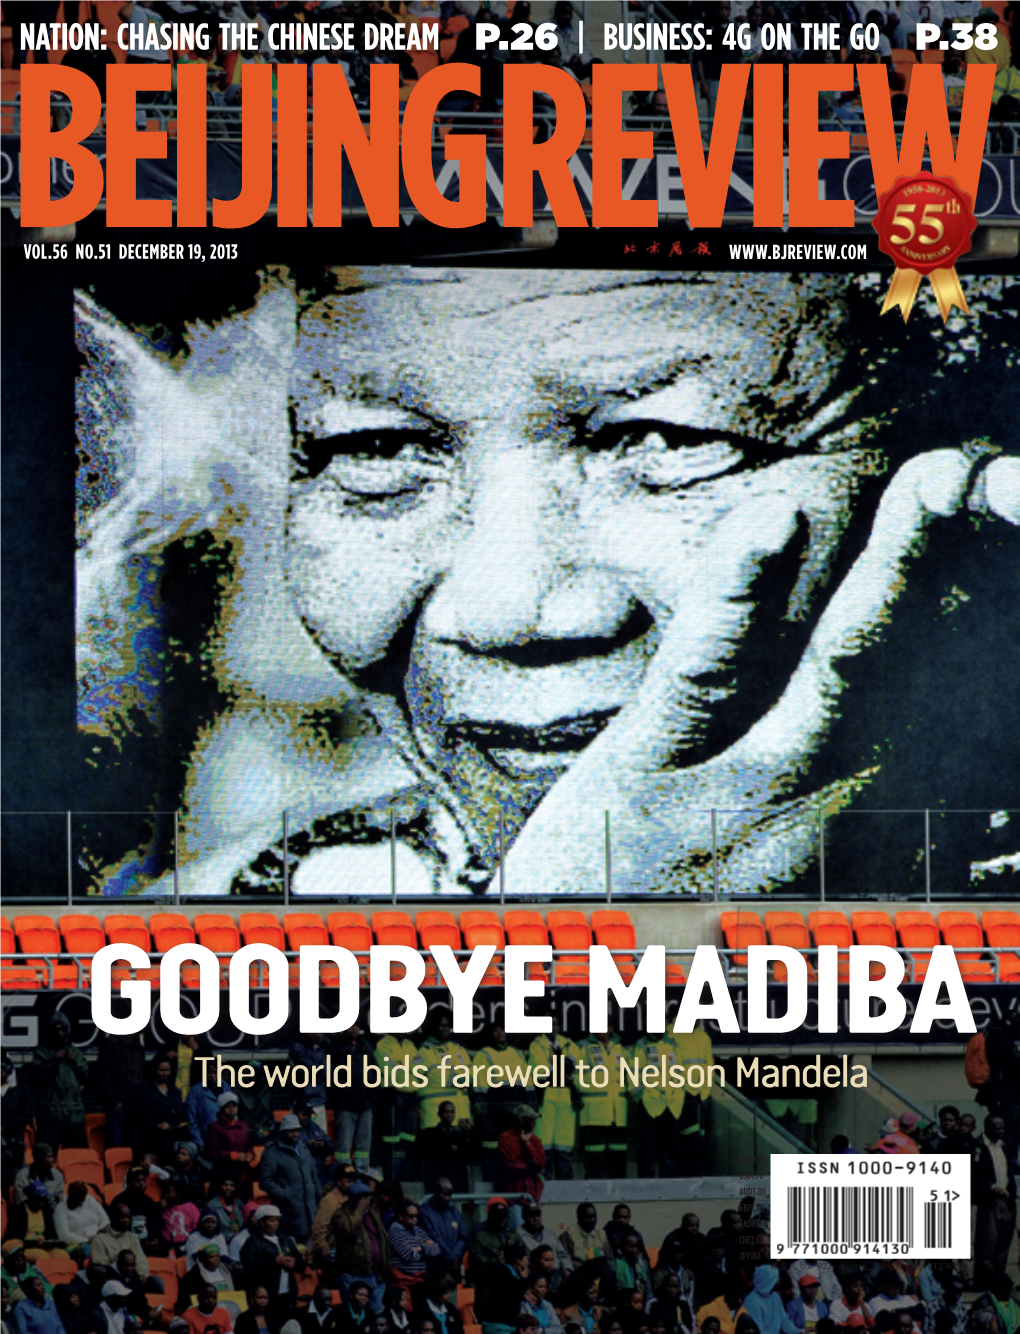 The World Bids Farewell to Nelson Mandela